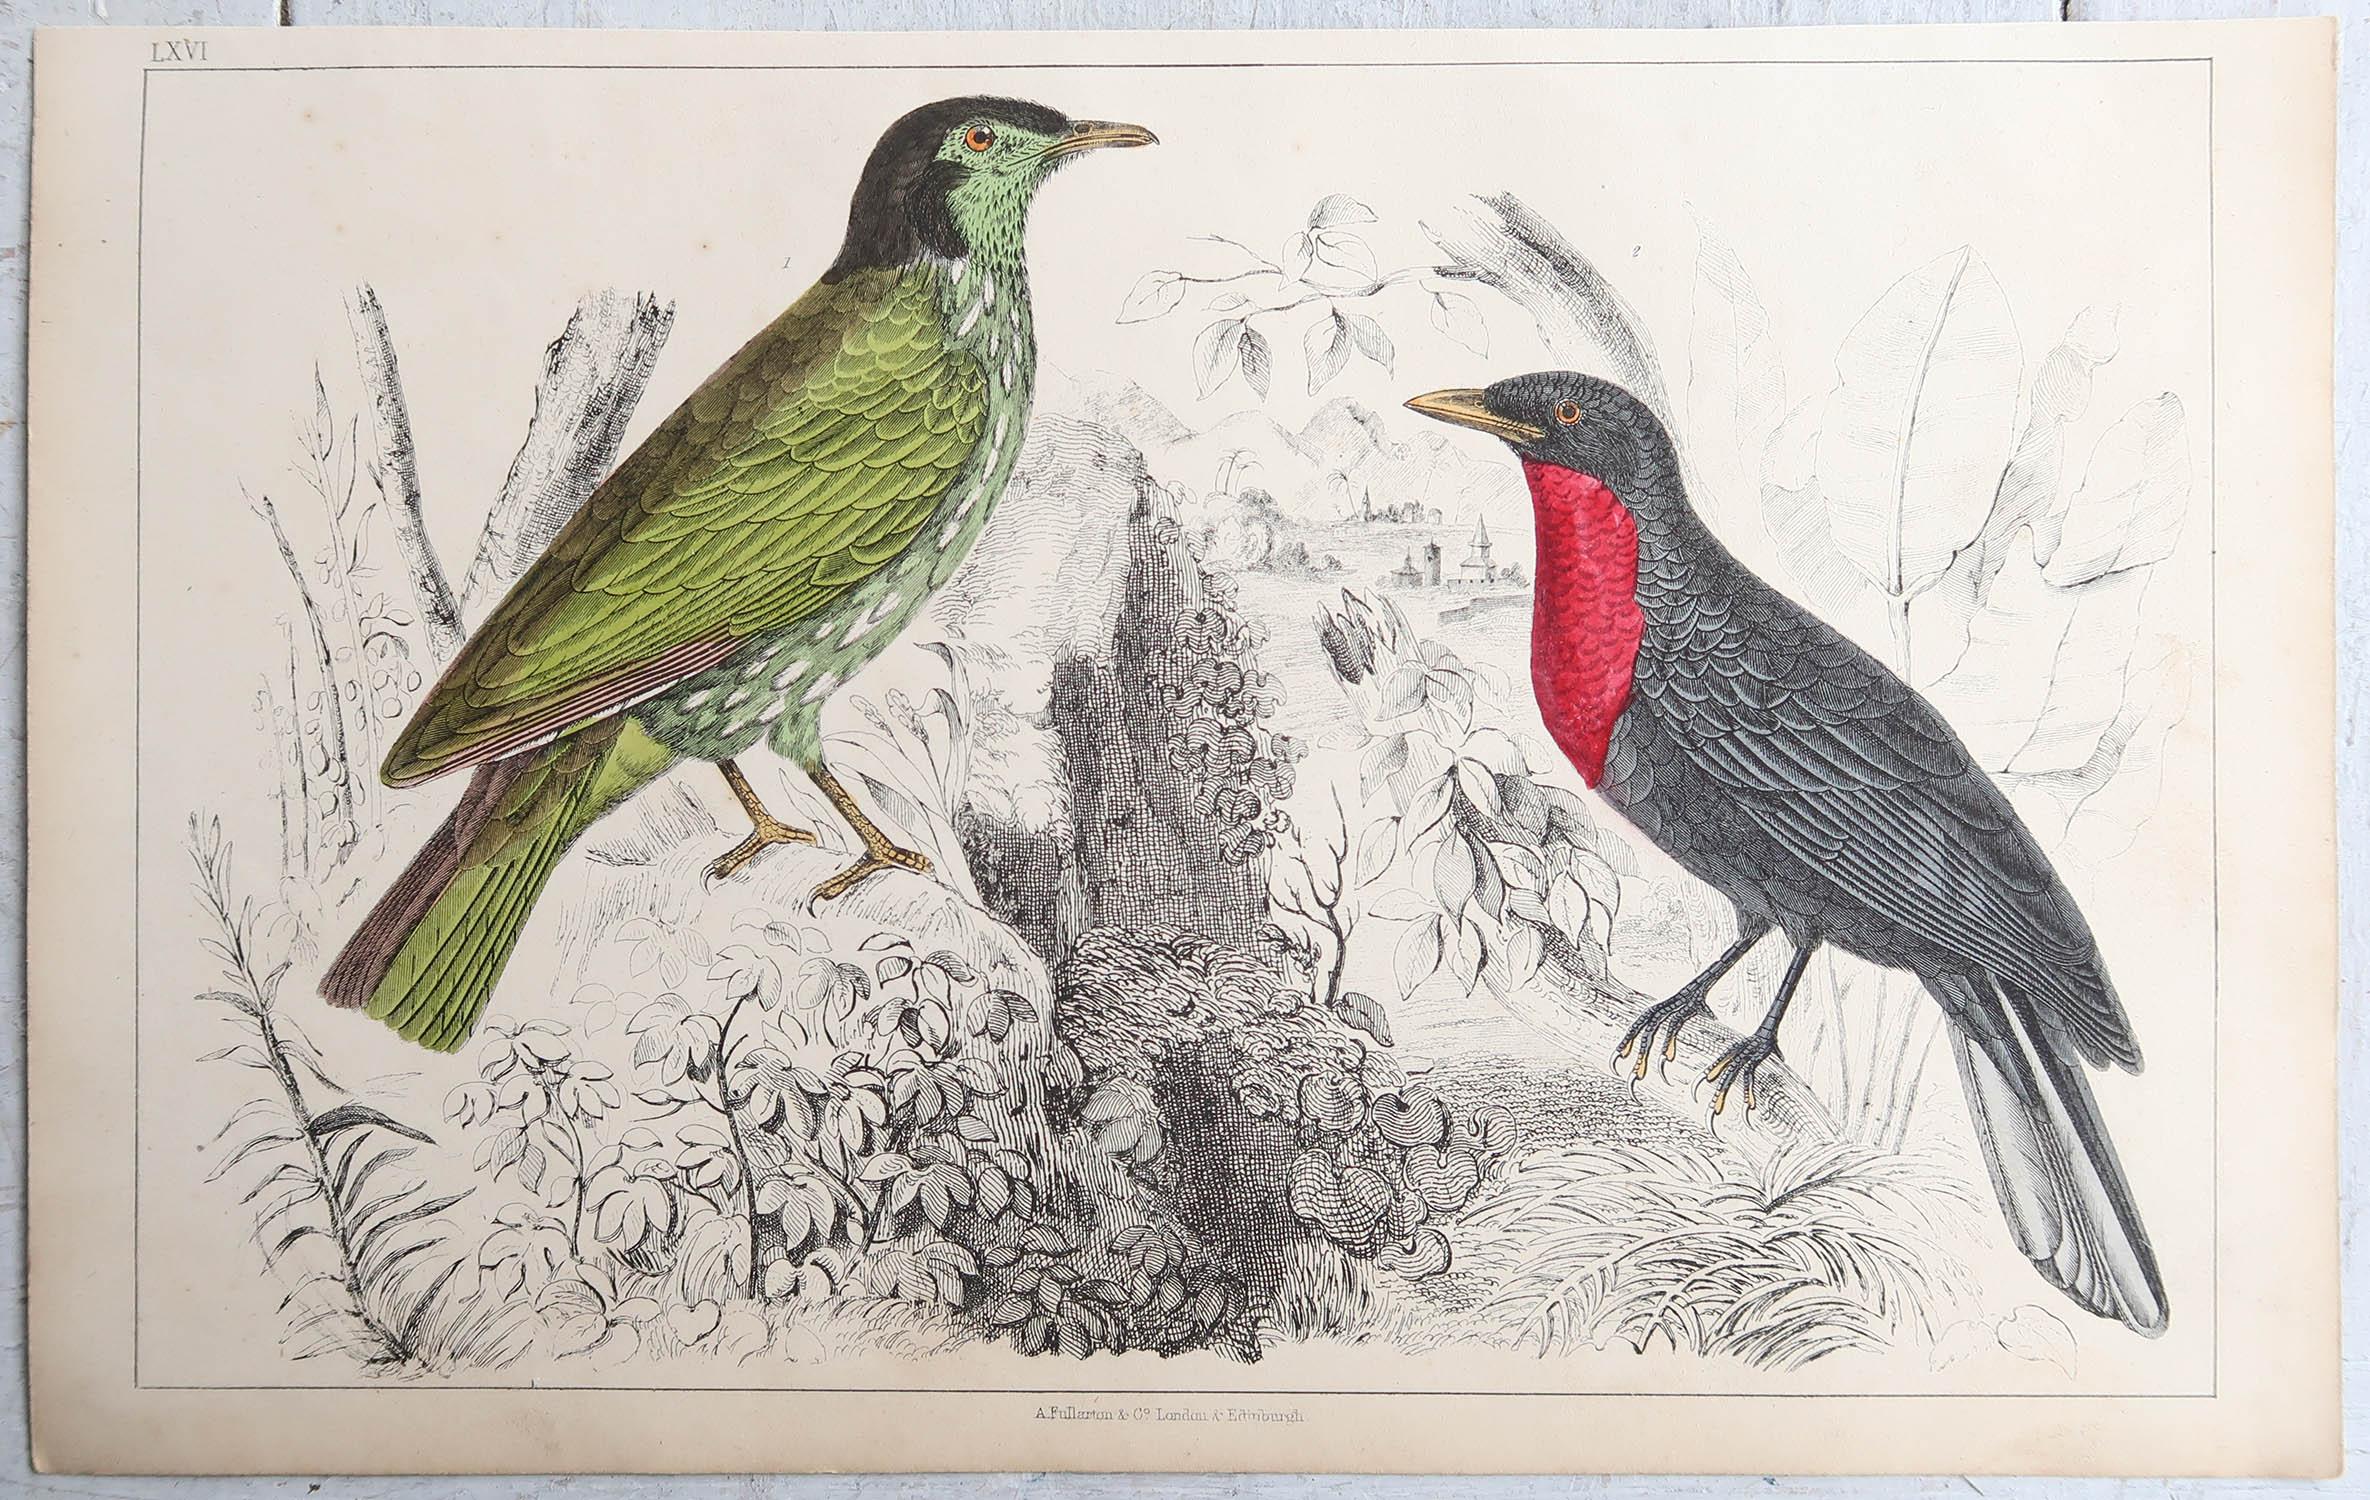 Folk Art Original Antique Print of a Fruit Crow, 1847 'Unframed' For Sale